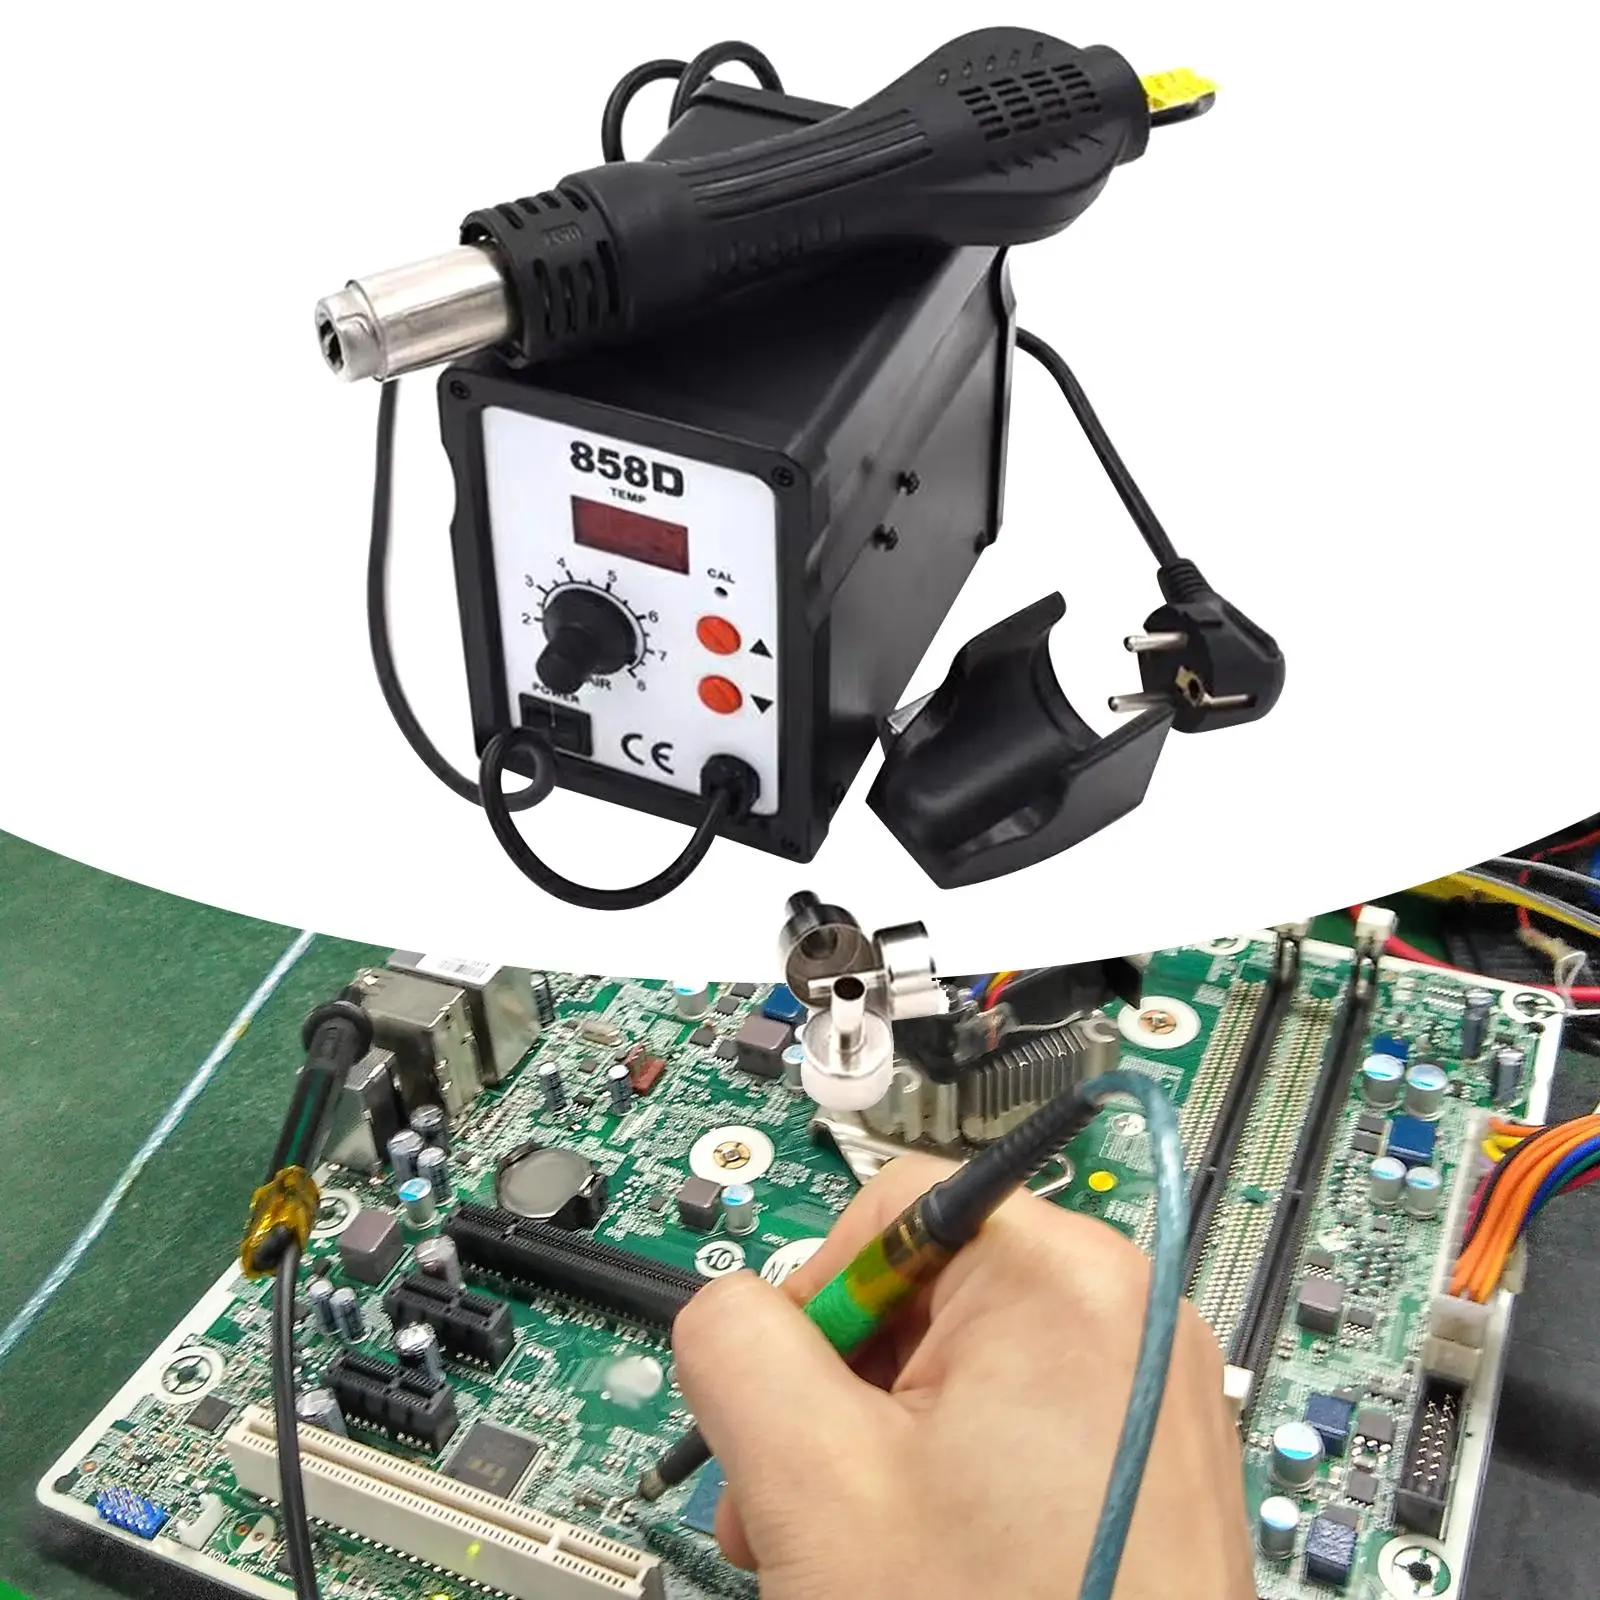 Digital Soldering Station Portable Alloy Adjustable Professional Desoldering Station for Repairing Laptop Electric Appliance